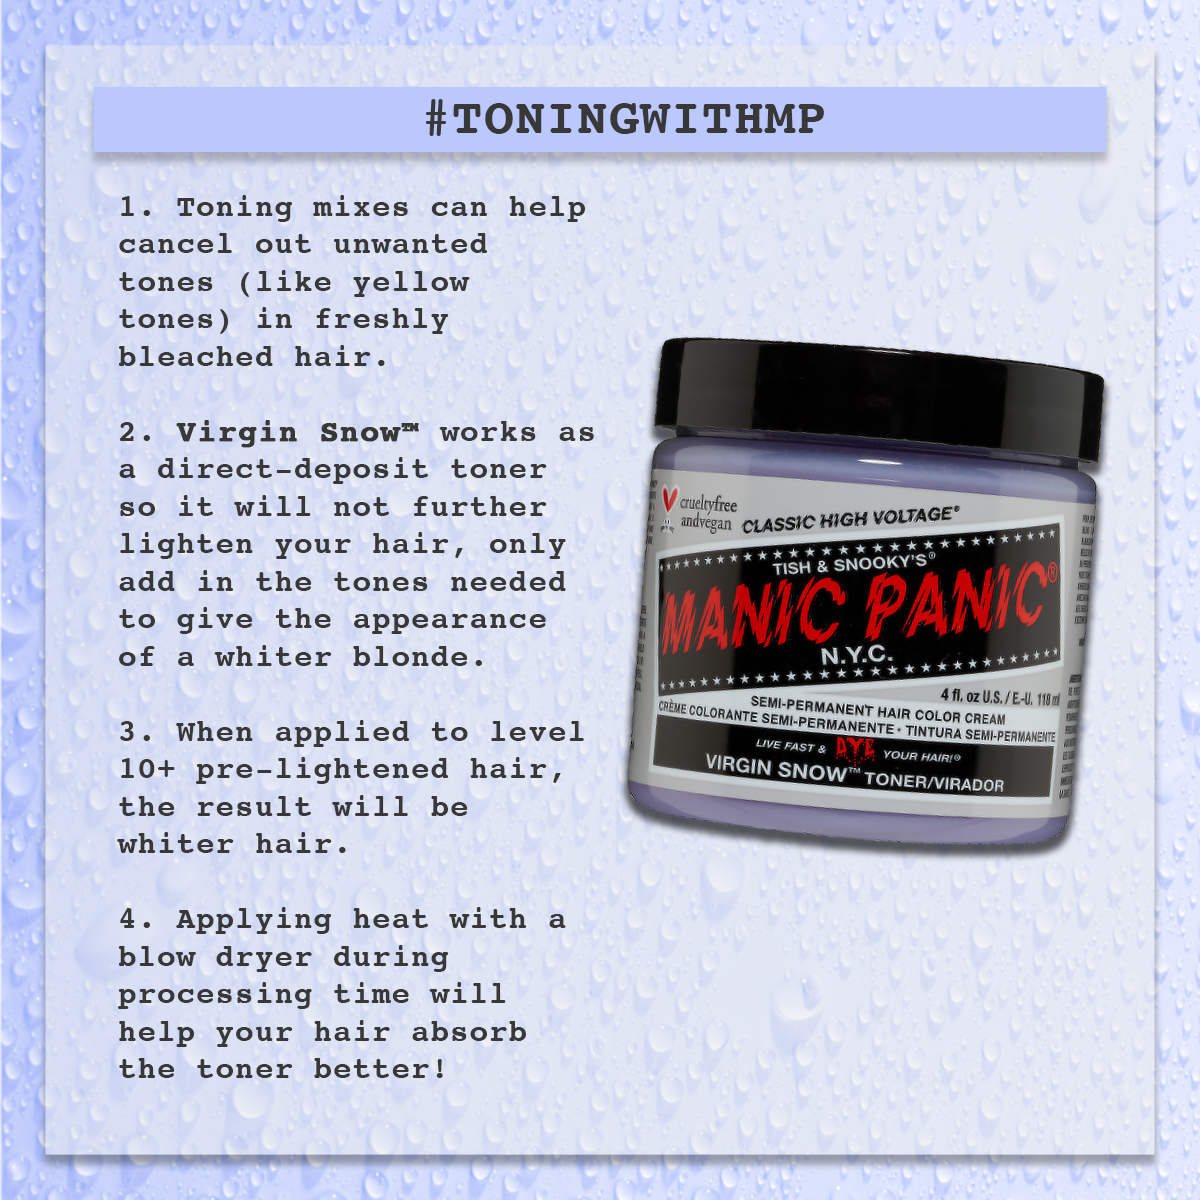 Manic Panic Flash Lightning Bleach Kit - 30 volume - rainbow